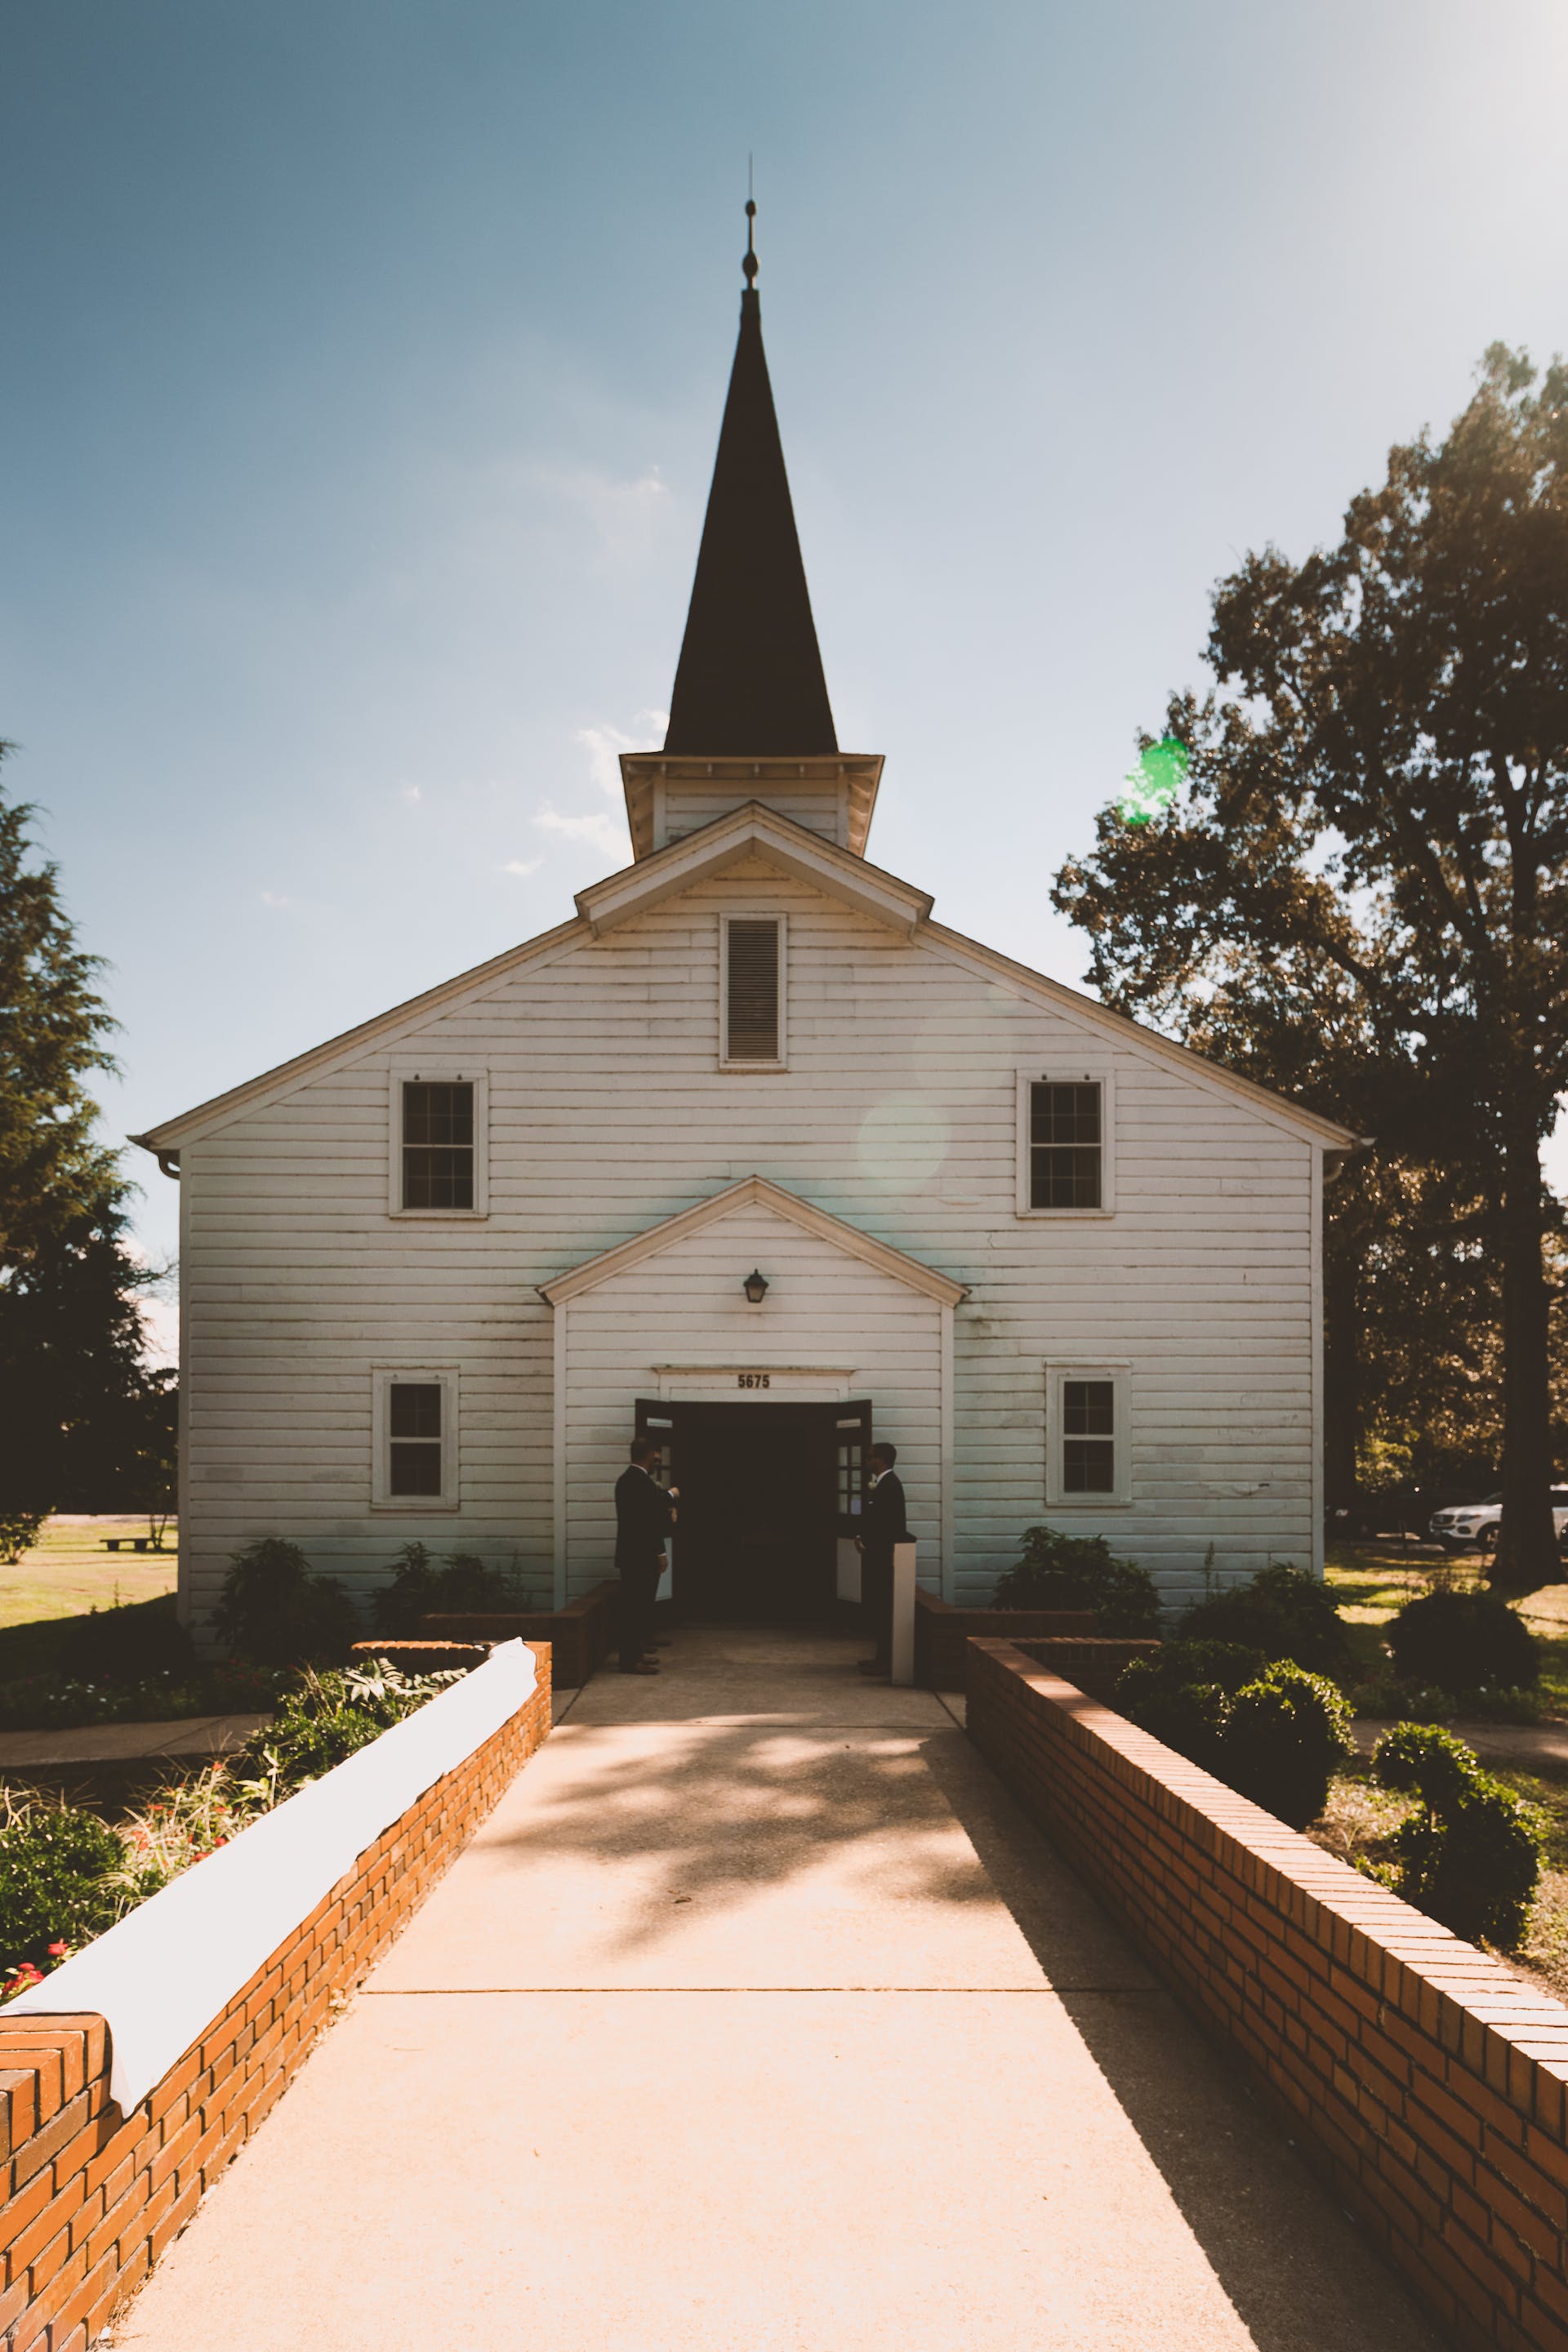 Uma igreja | Fonte: Pexels